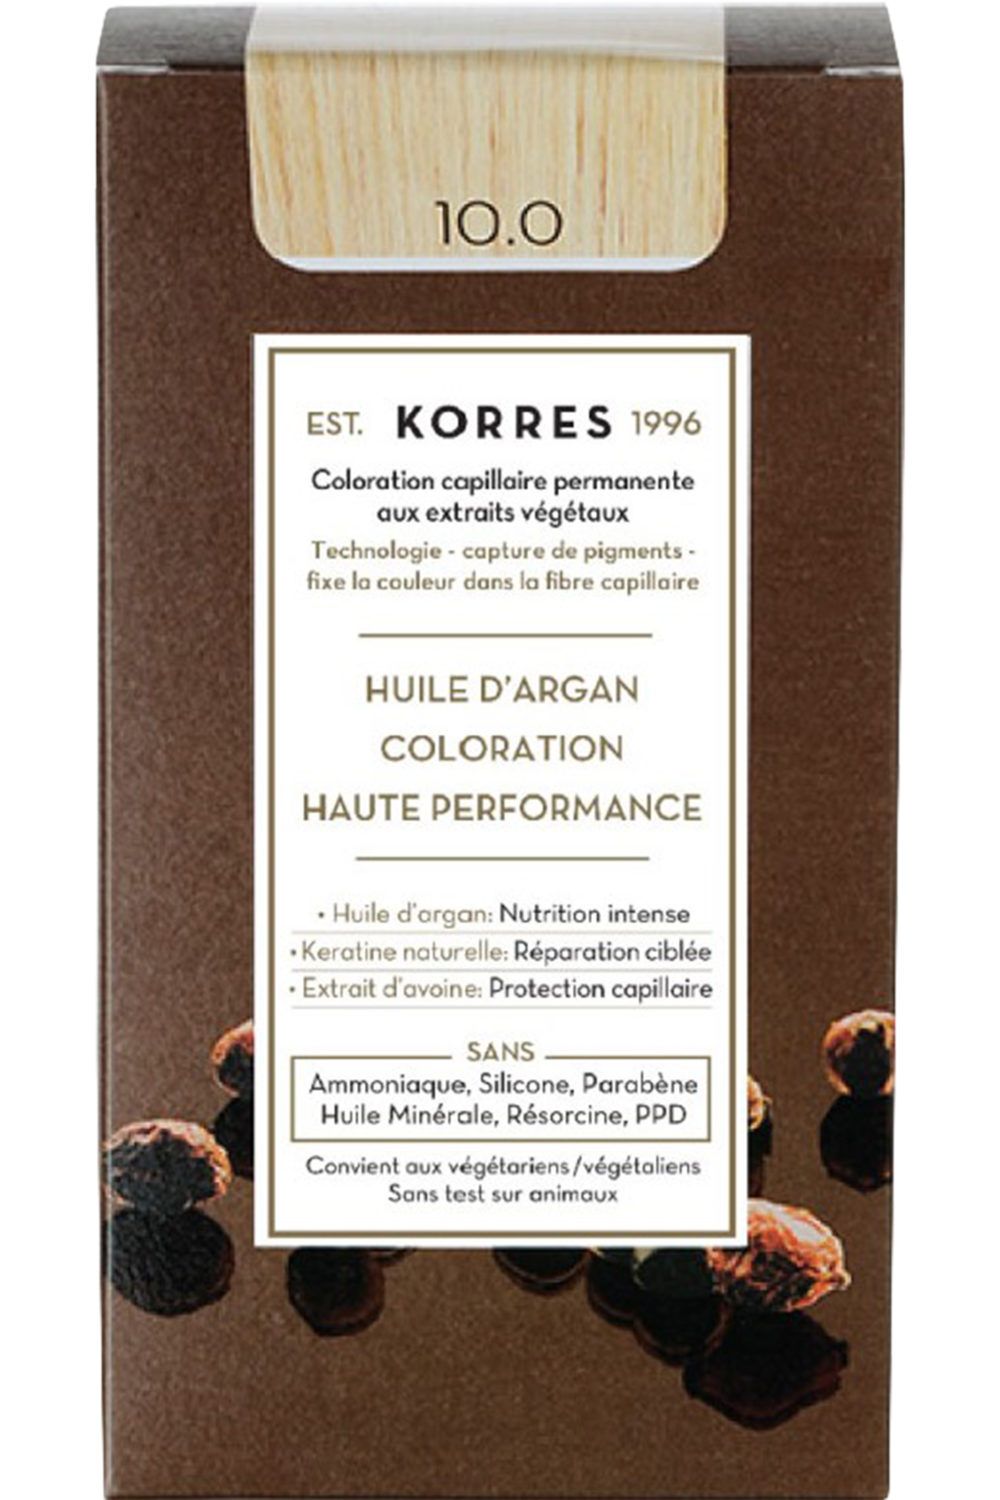 Korres - Coloration permanente huile d'argan Blond platine 10.0